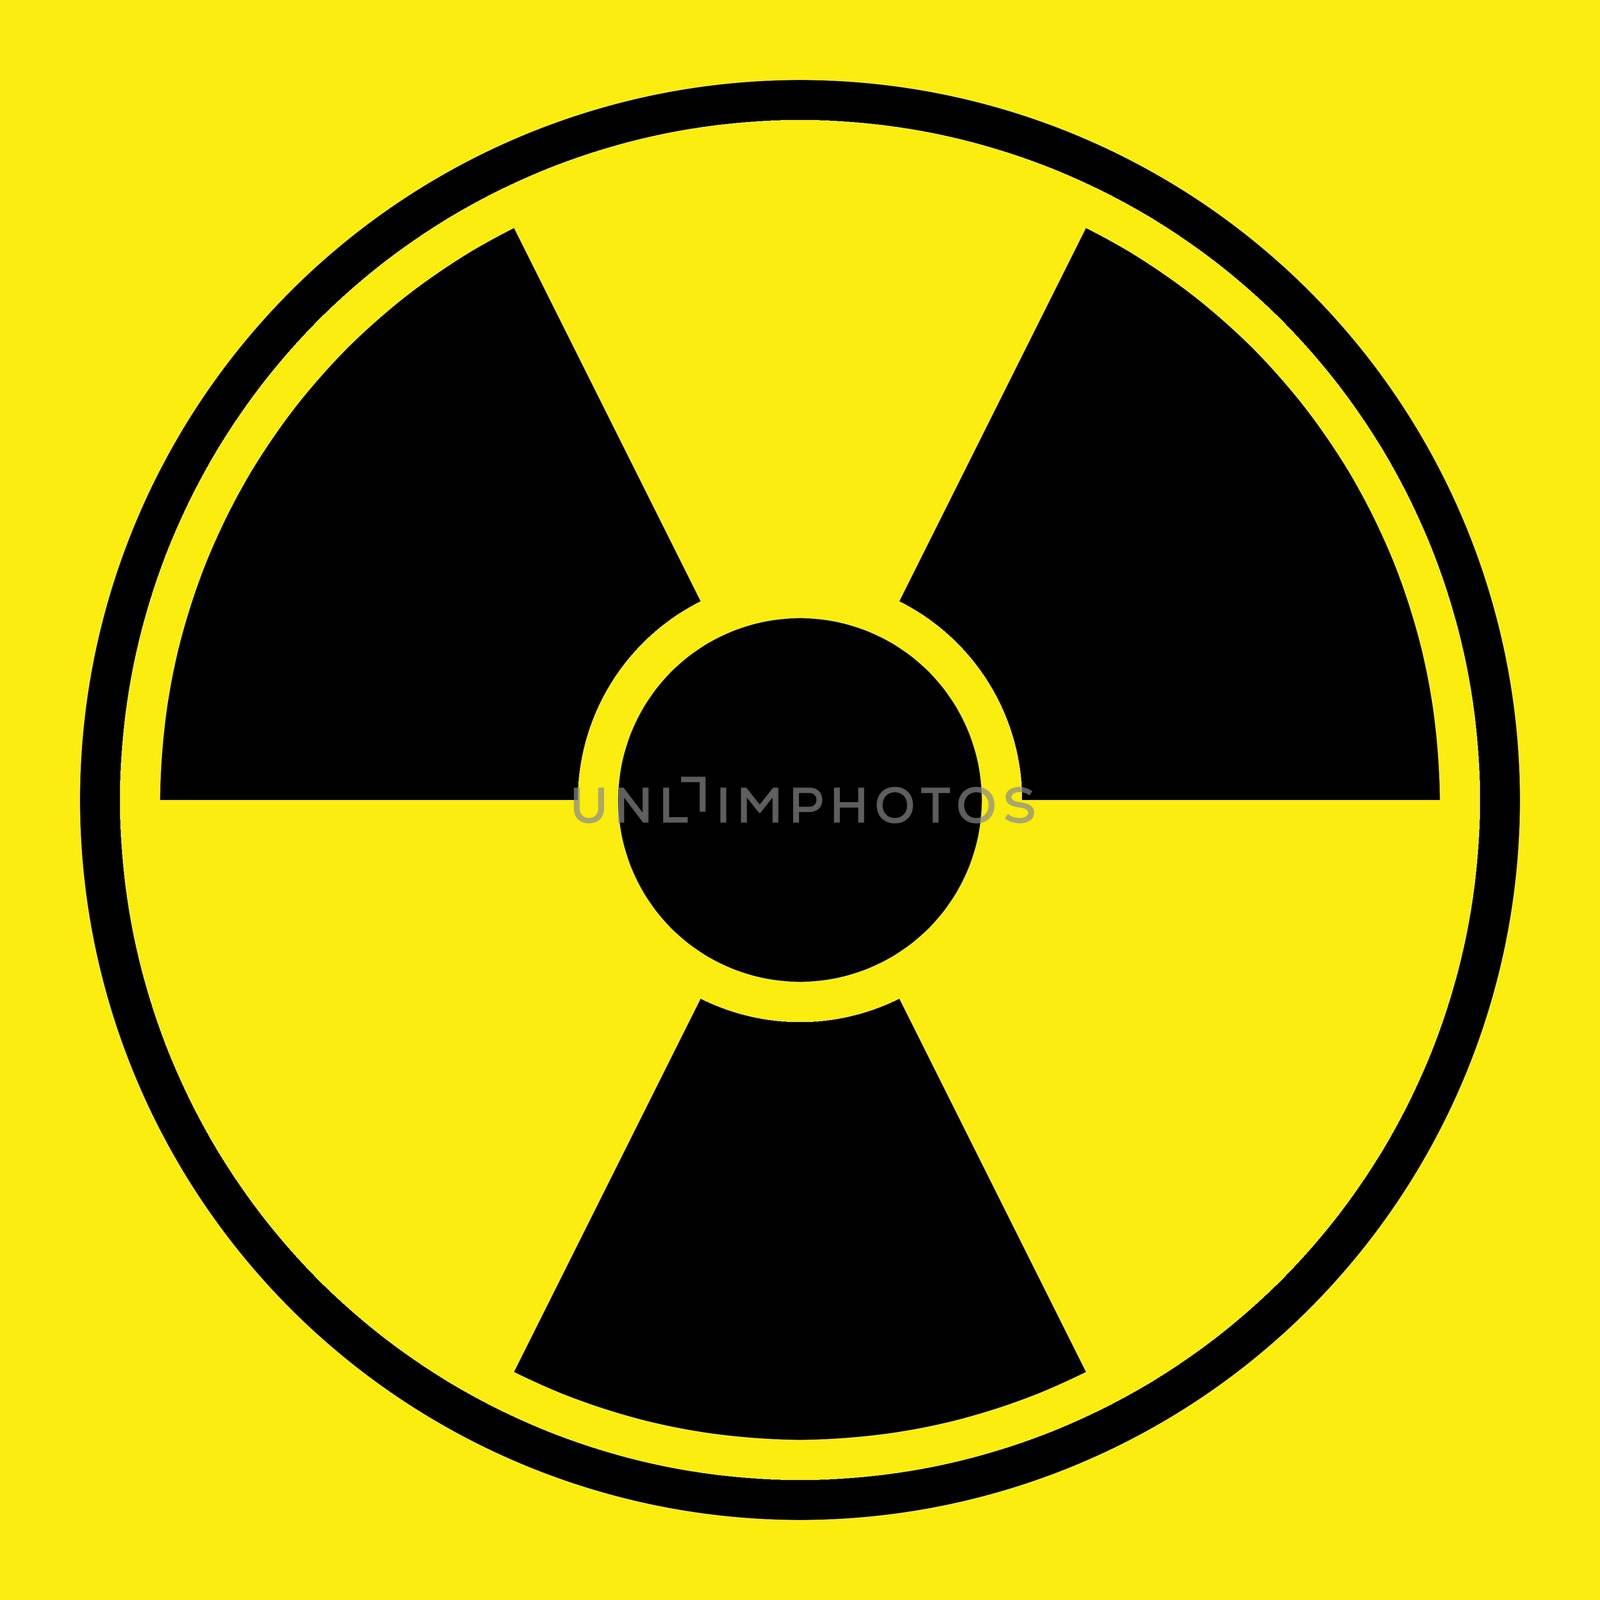 Round radiation warning sign on yellow background